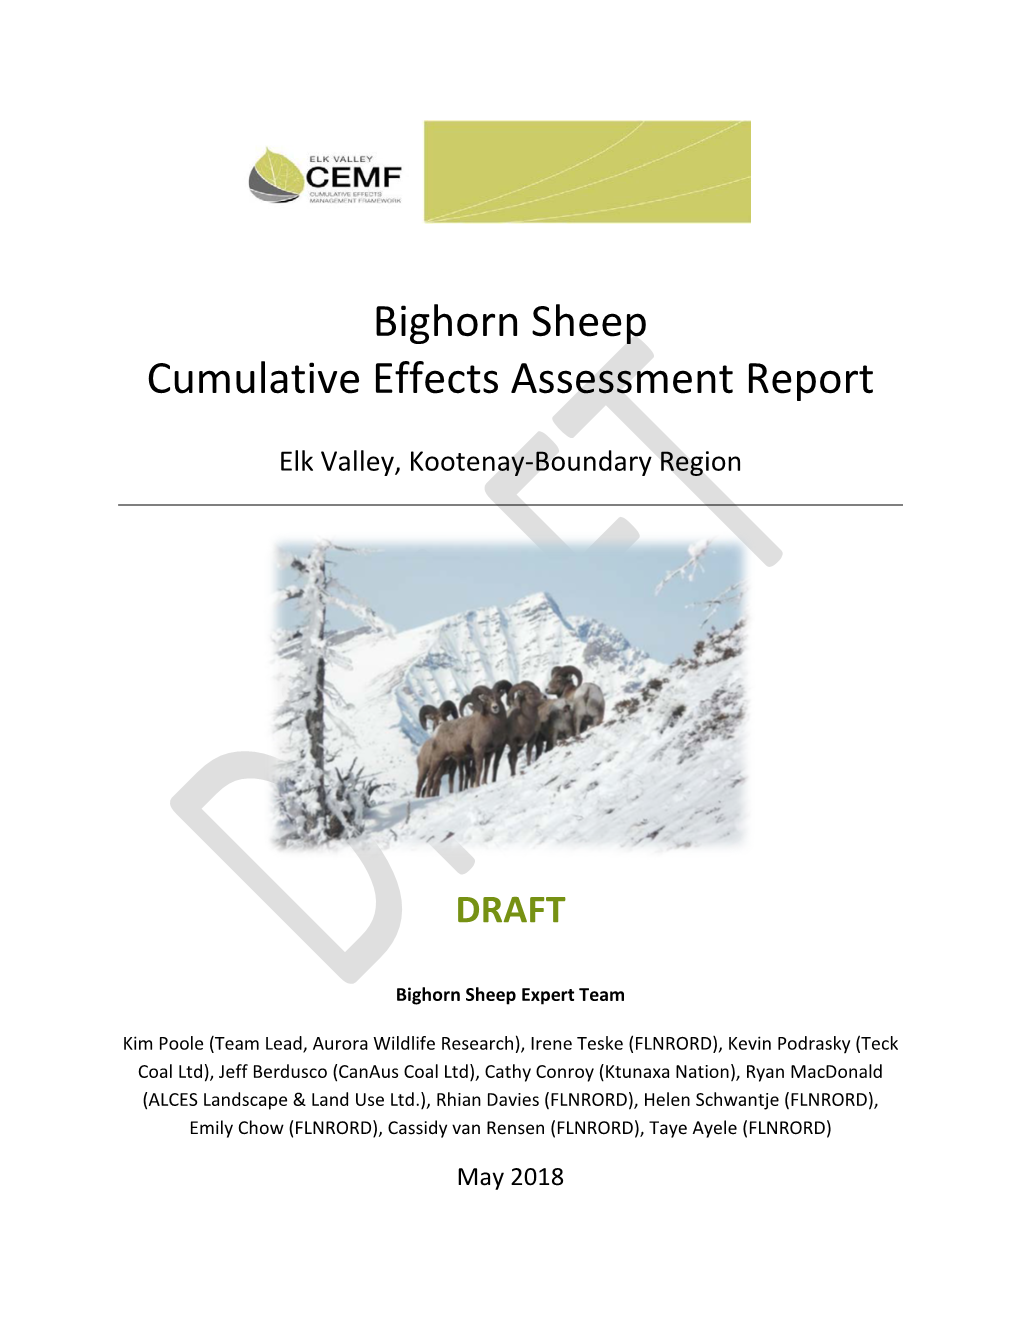 Bighorn Sheep Cumulative Effects Assessment Report